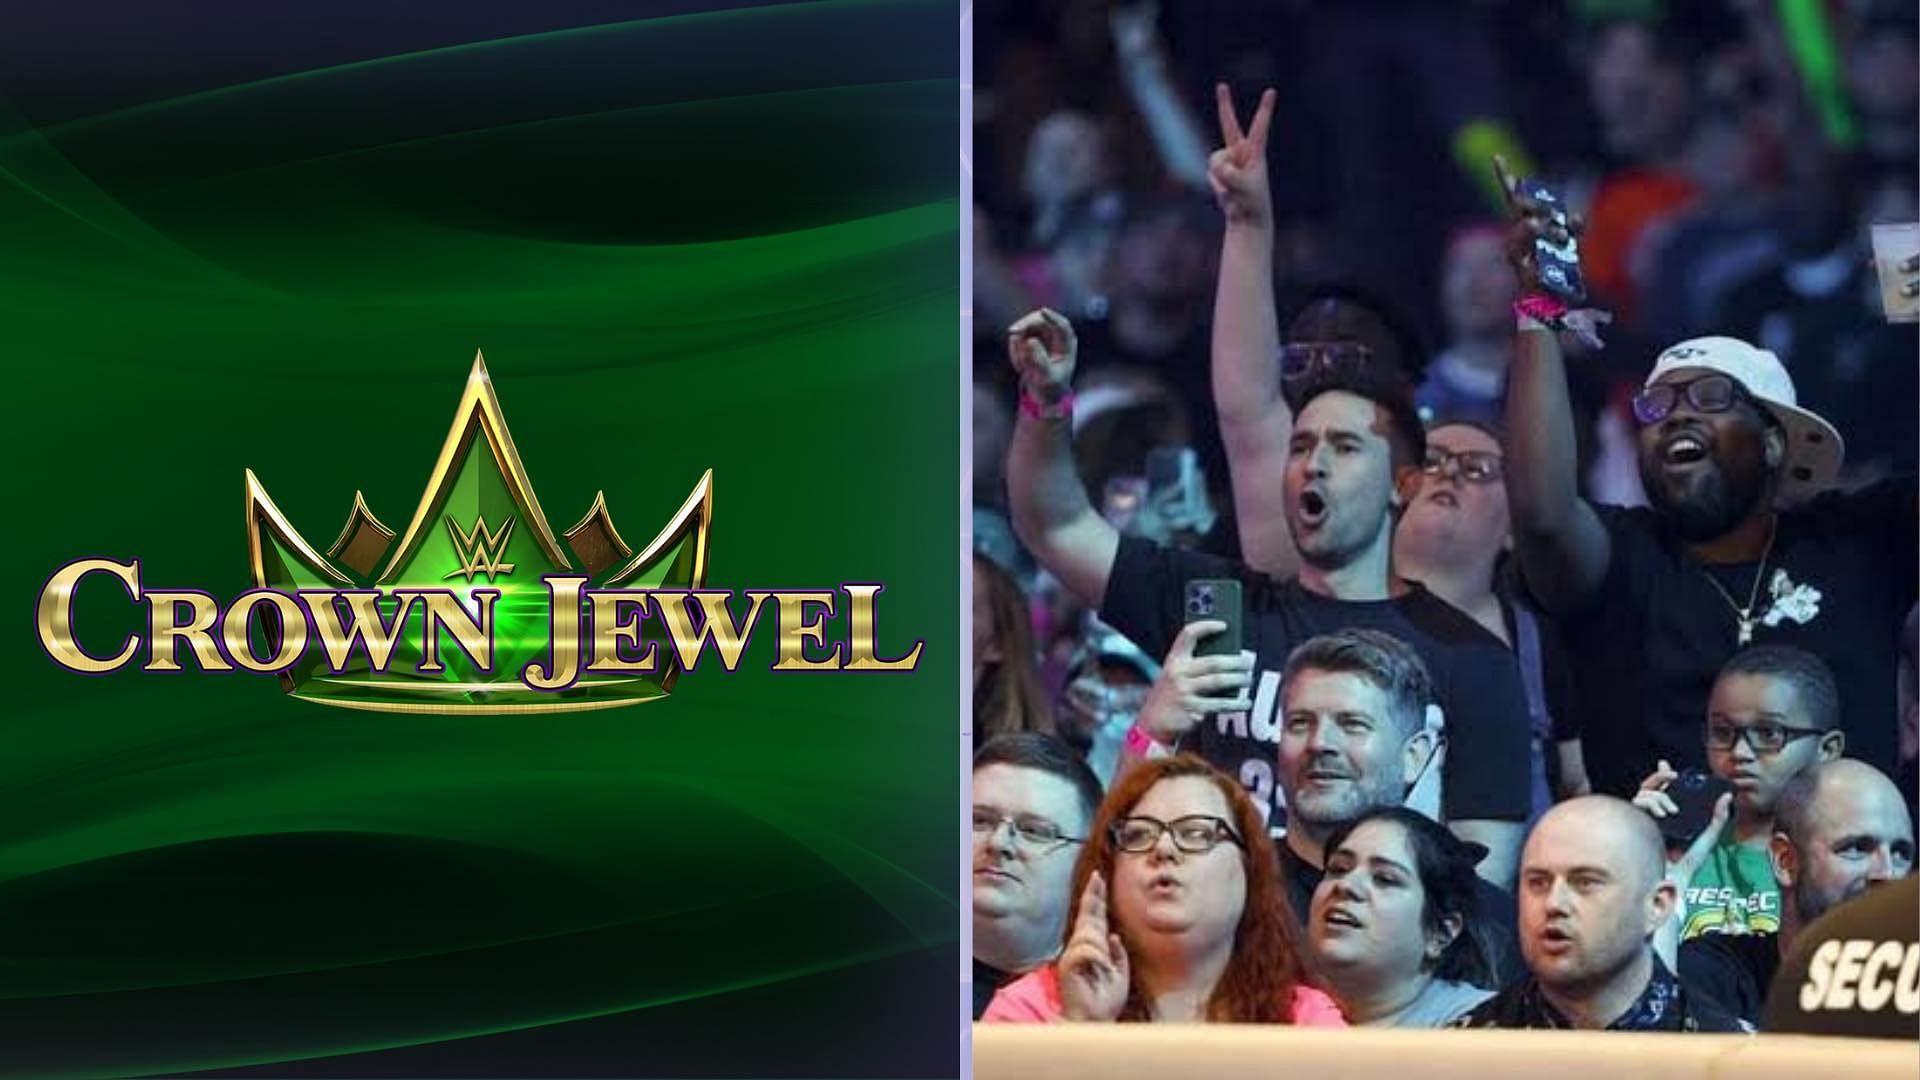 Crown Jewel is WWE